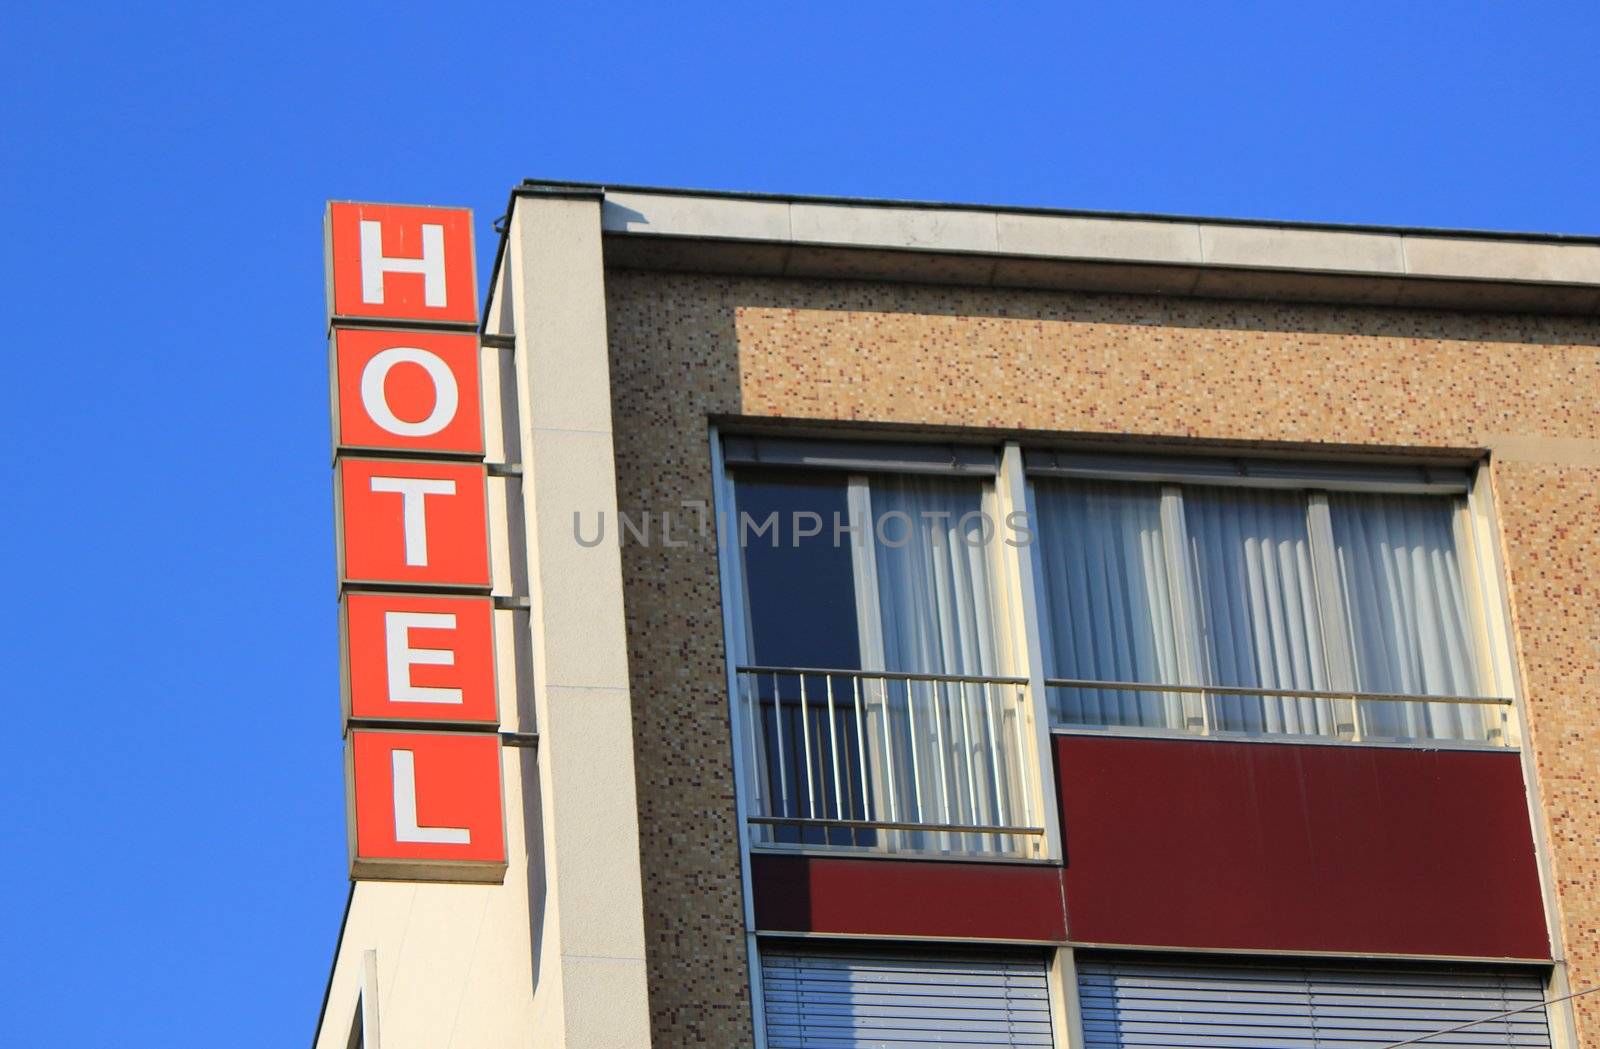 Hotel sign by Elenaphotos21